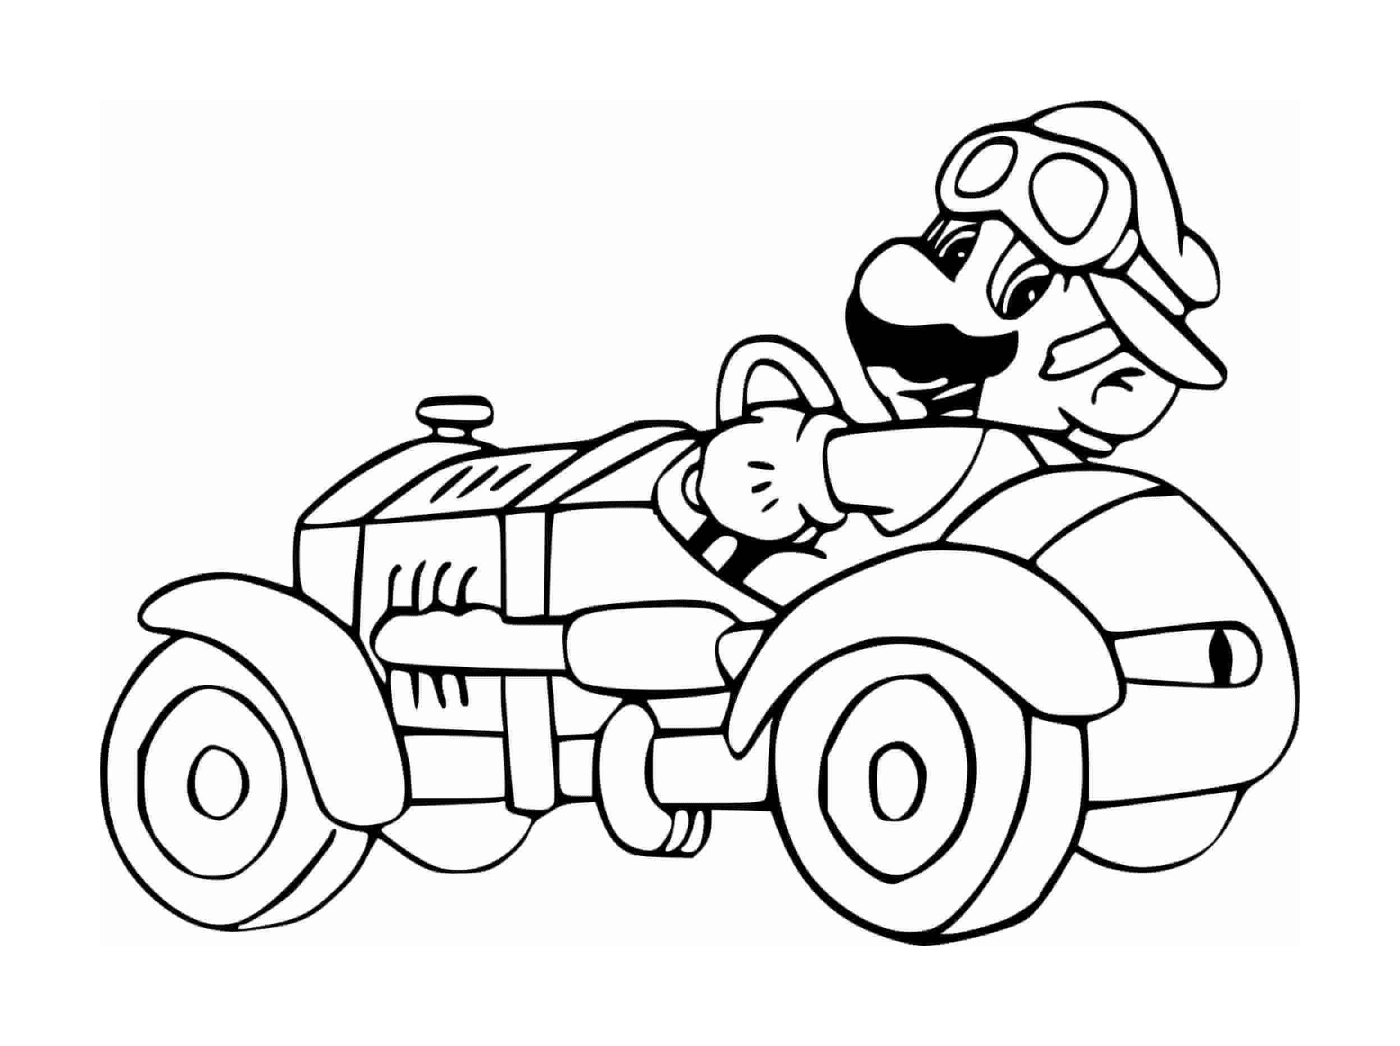  Mario conduciendo un coche 